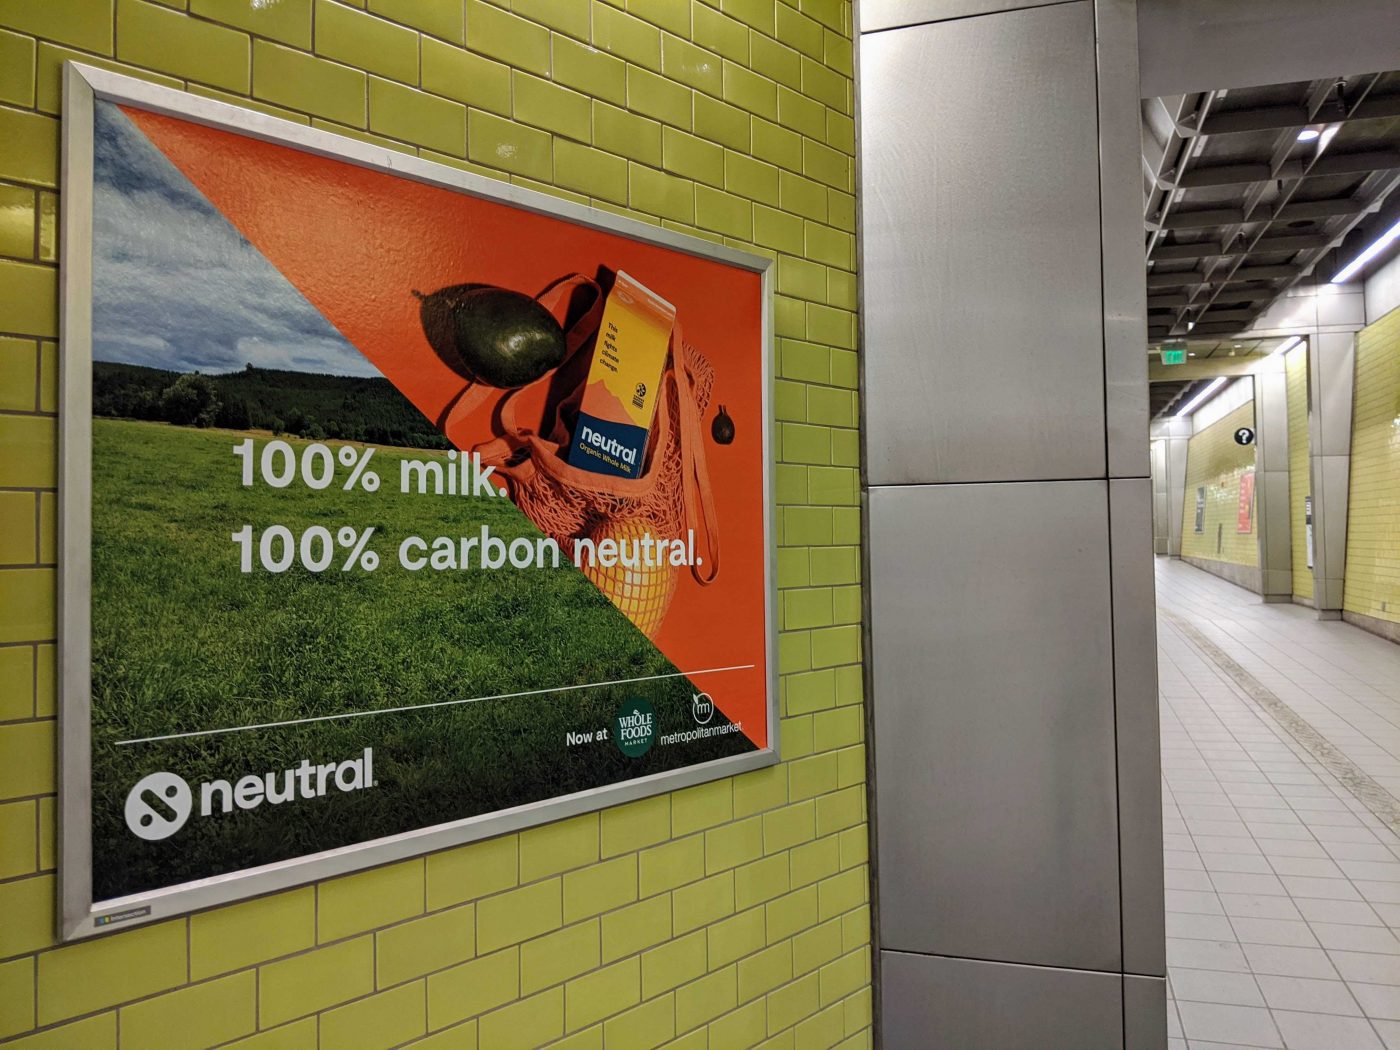 An advertisement says "100% milk. 100% carbon-neutral."